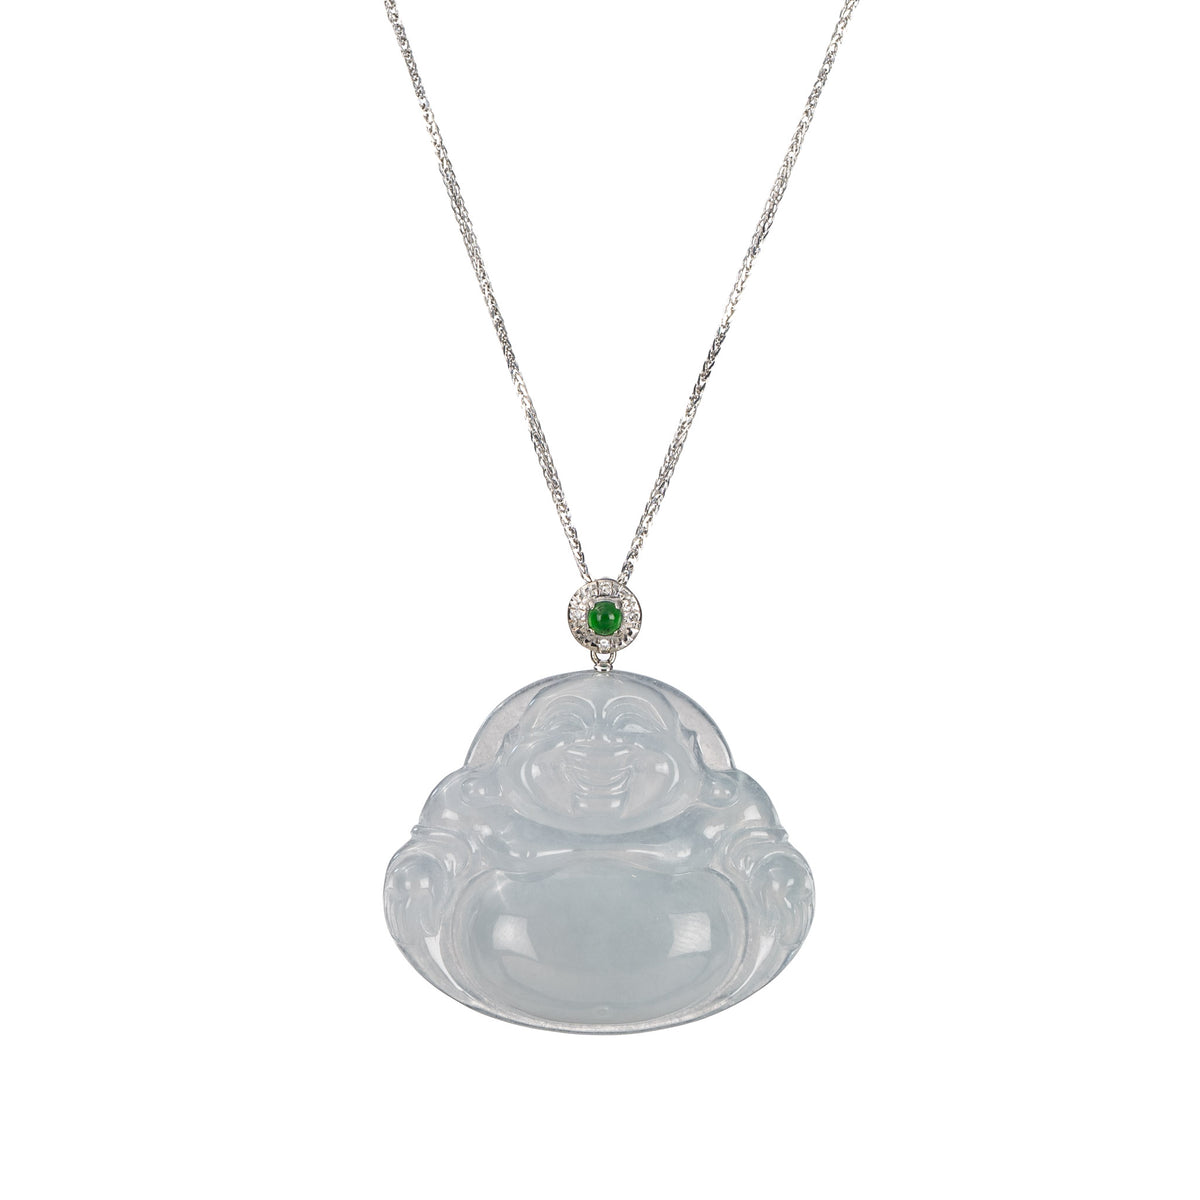 Icy Laughing Buddha Jadeite Jade Necklace - 18K White Gold